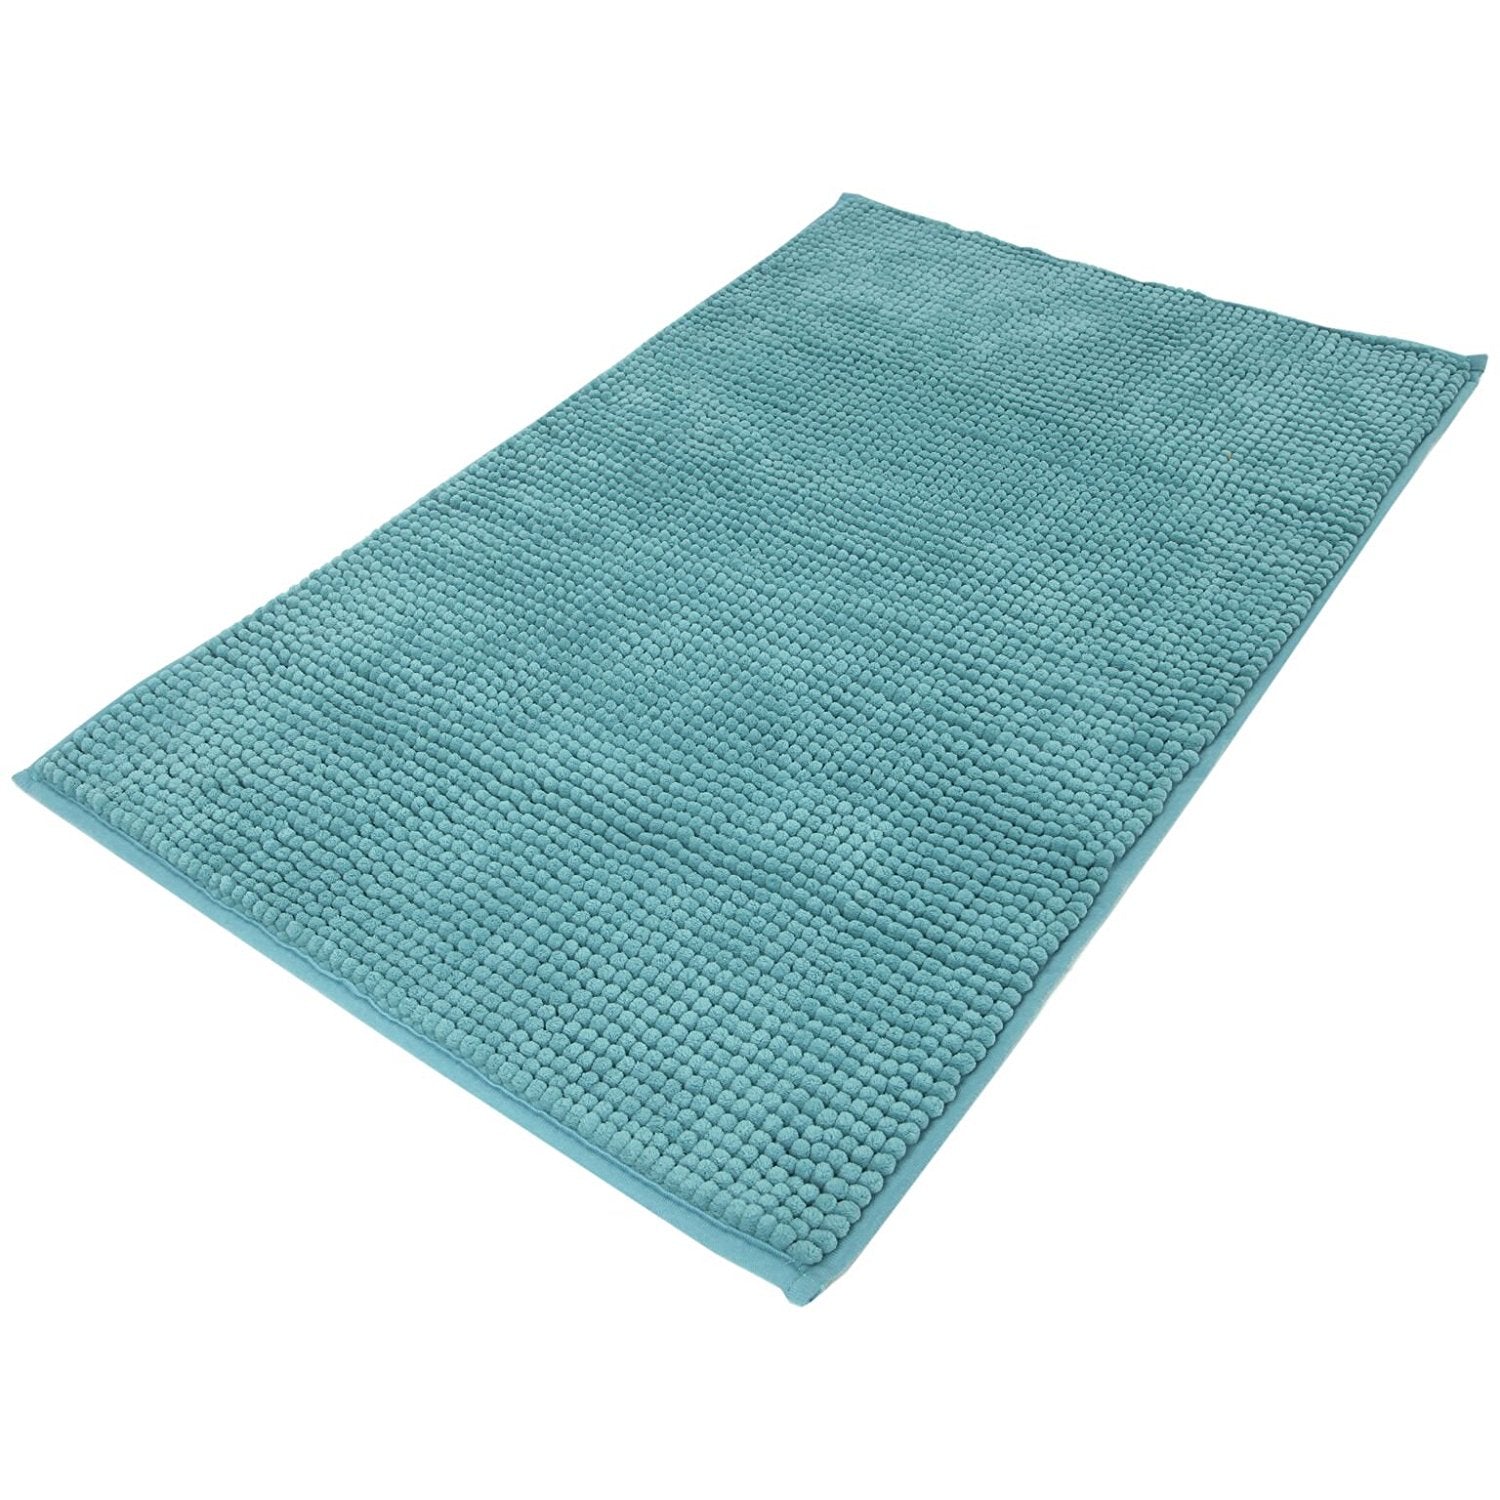 Blue Polyester Nonslip Soft Rubber Bath Mat for Bathtub